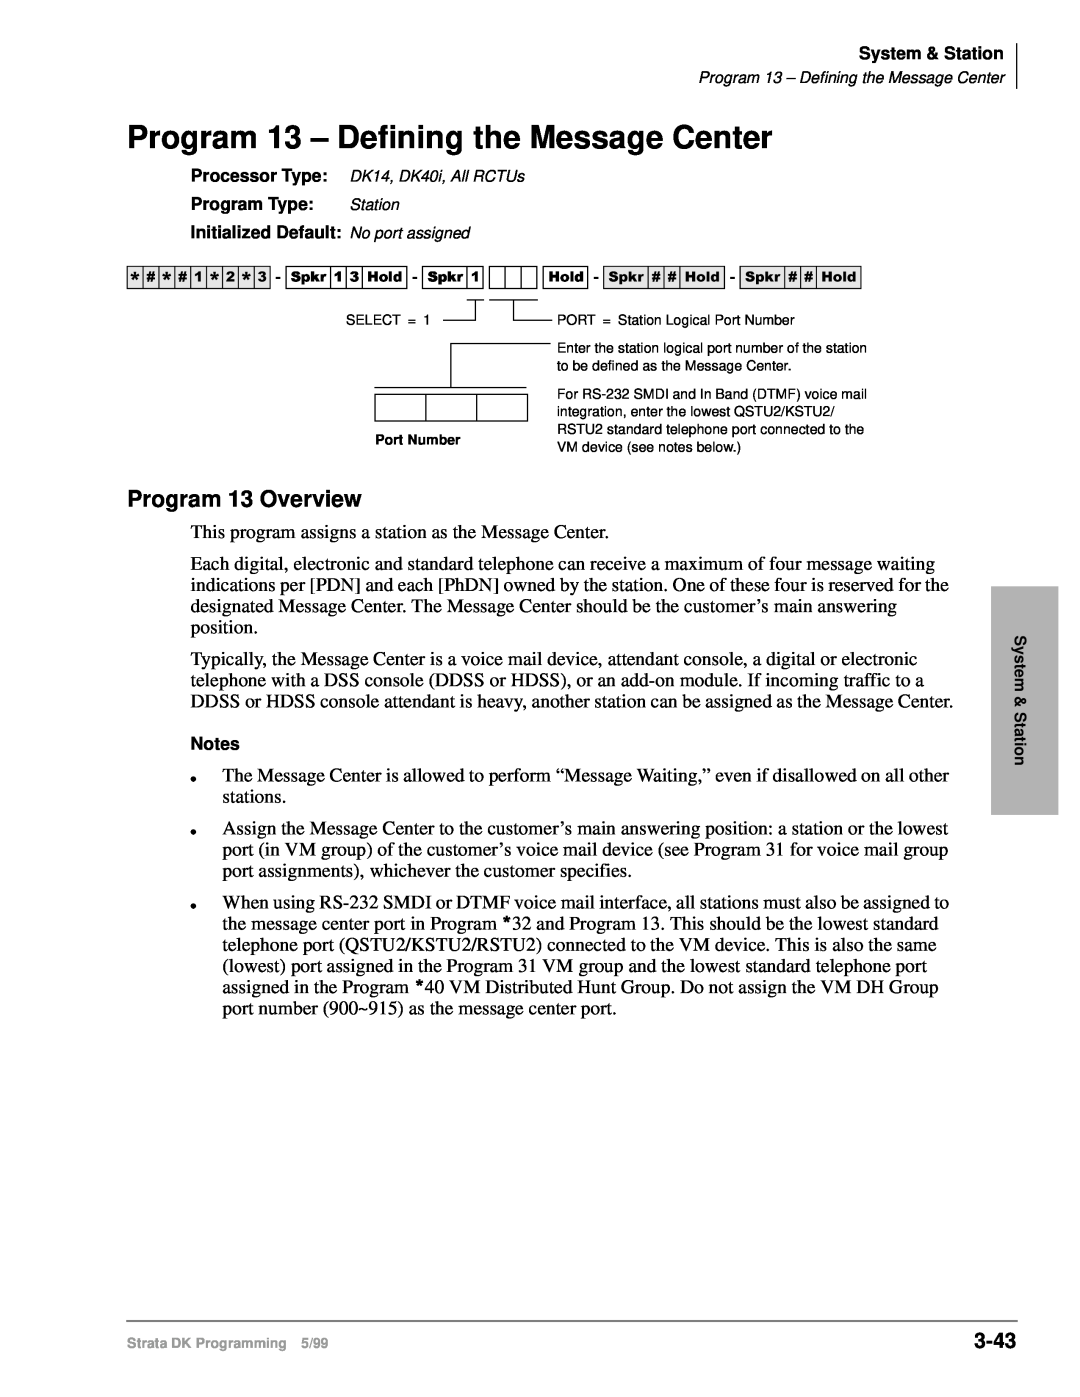 Toshiba dk14 manual Program 13 – Defining the Message Center, 6SNU+ROG6SNU+ROG, Program 13 Overview, 3-43 